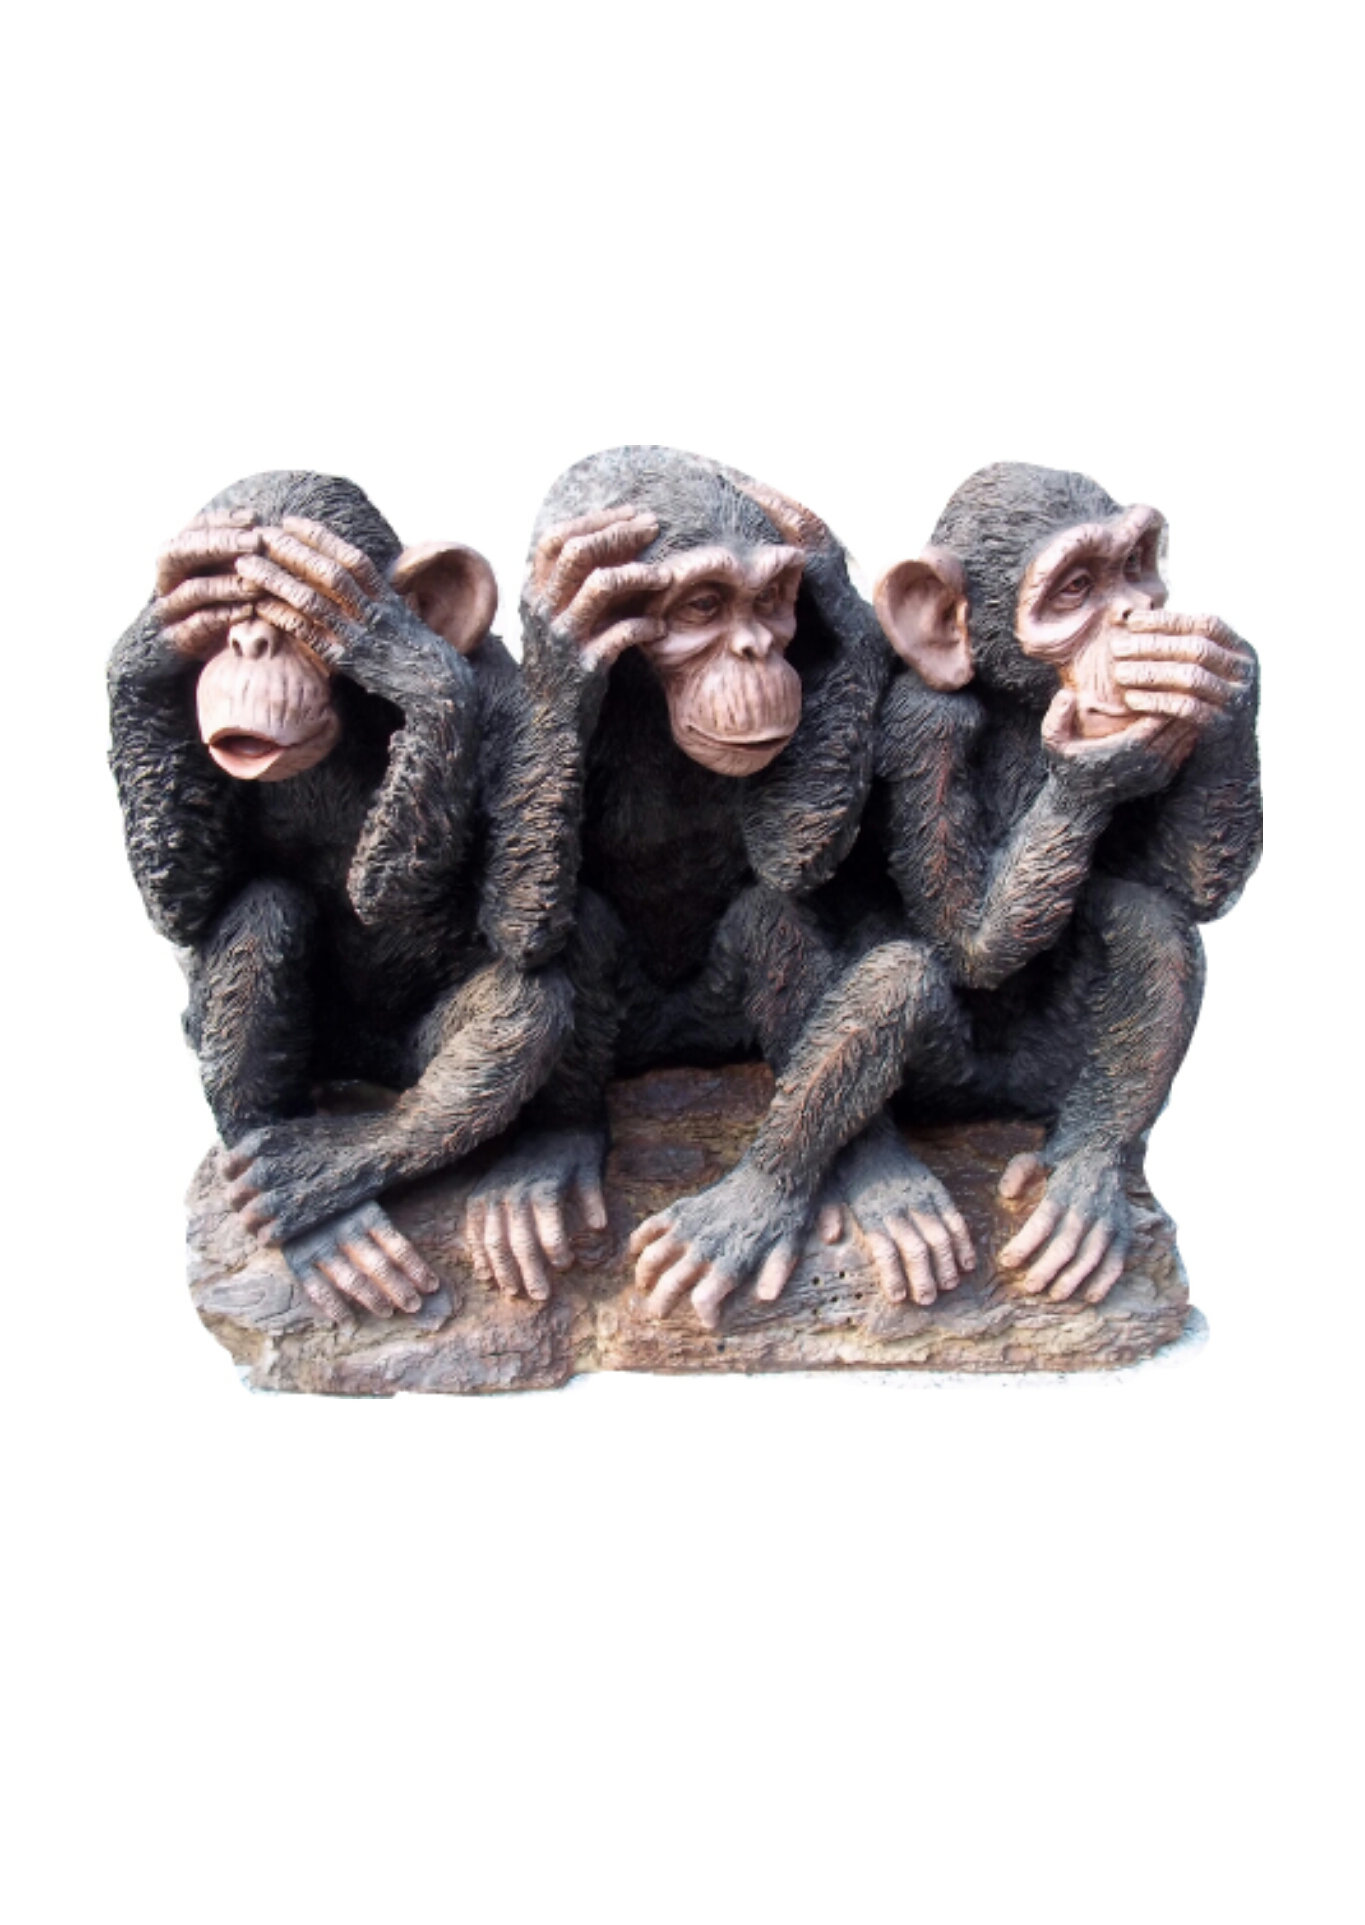 seehearspeak-no-evil-monkey-family-statue.jpg